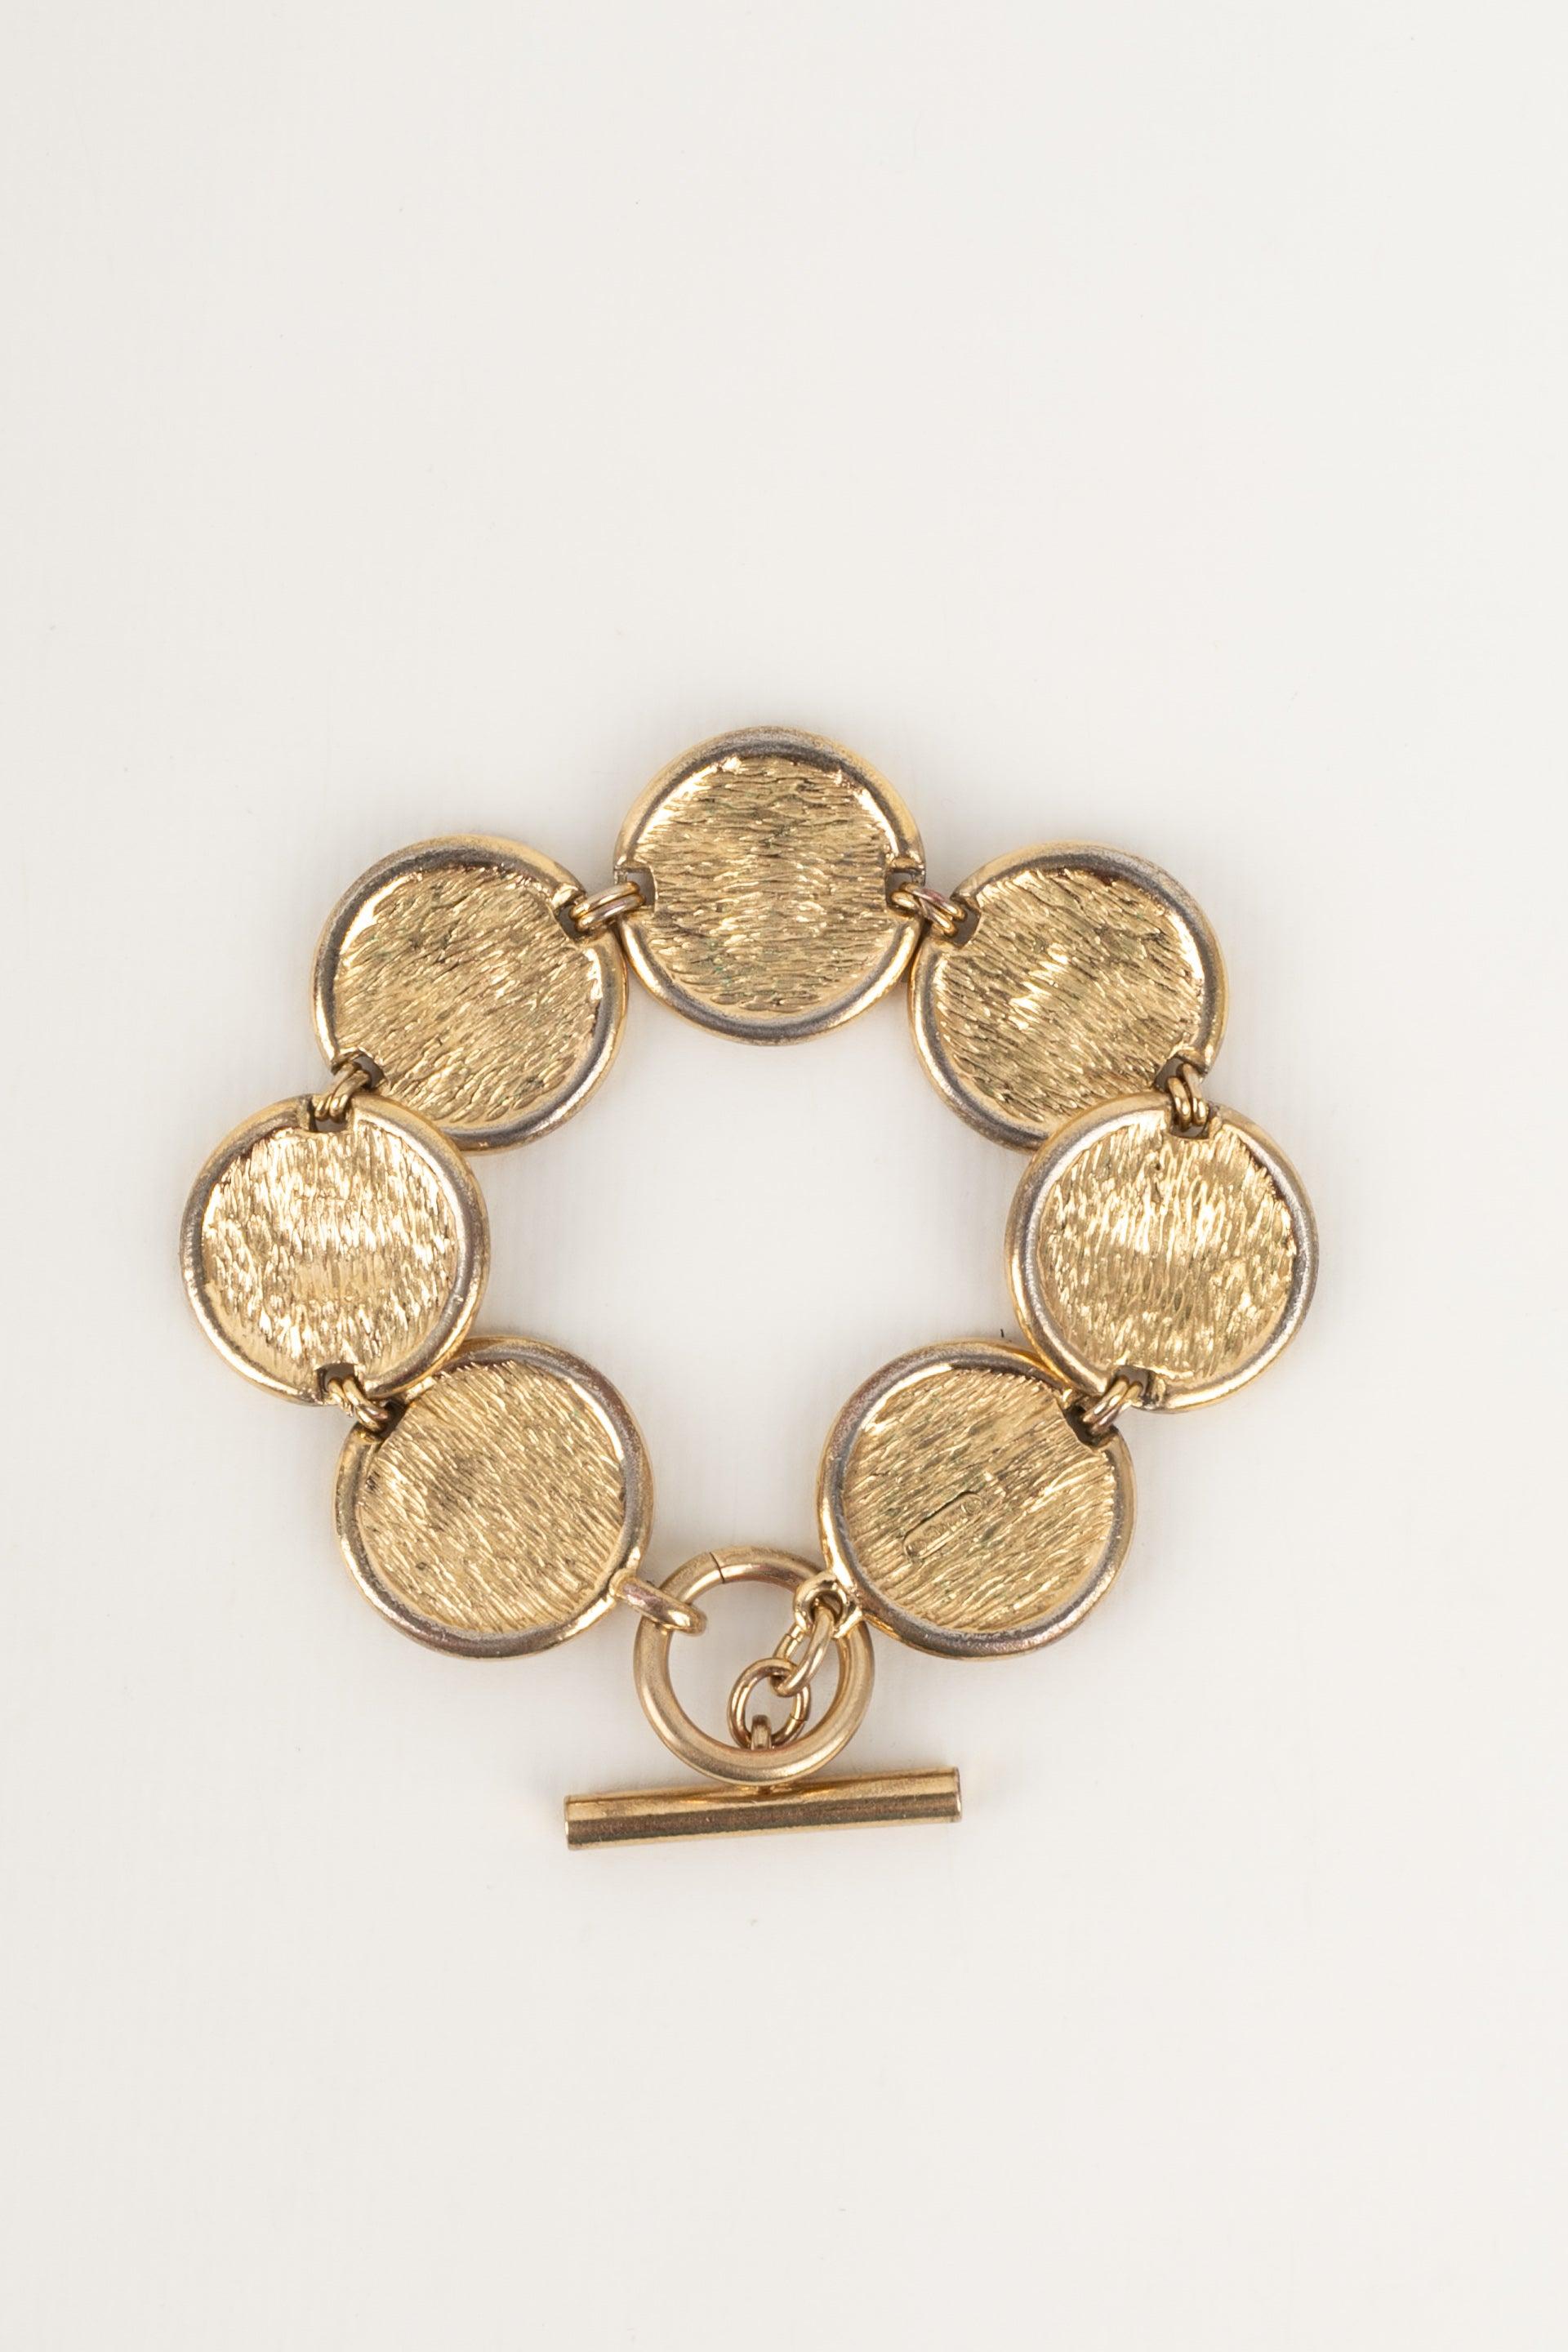 Christian Dior Golden Metal Bracelet Representing Coins For Sale 1